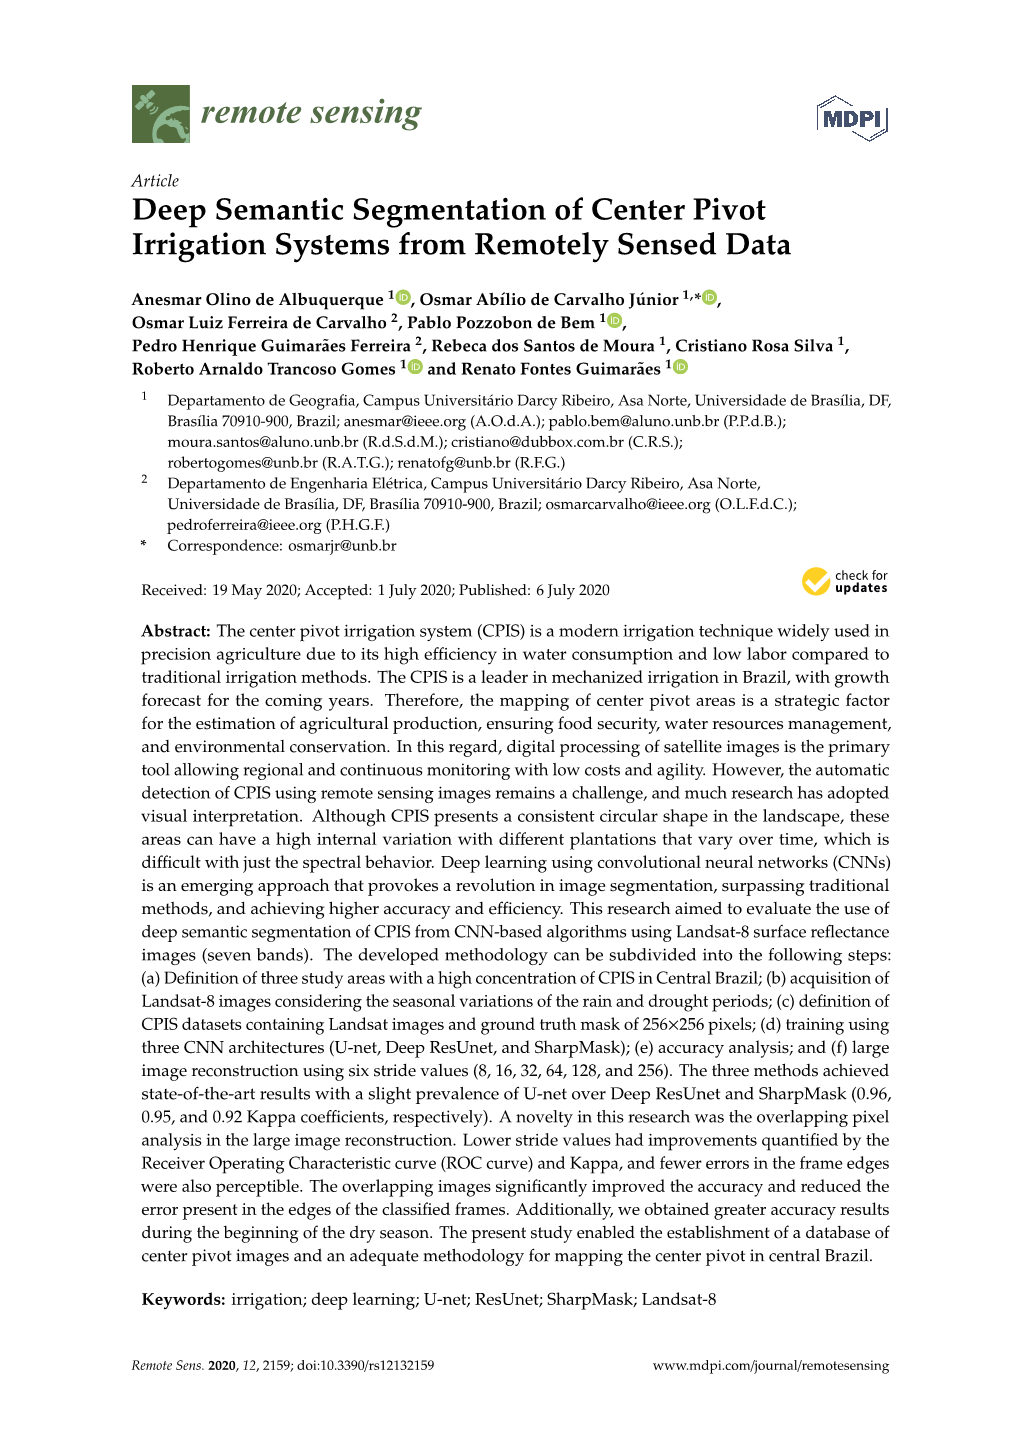 Deep Semantic Segmentation of Center Pivot Irrigation Systems from Remotely Sensed Data